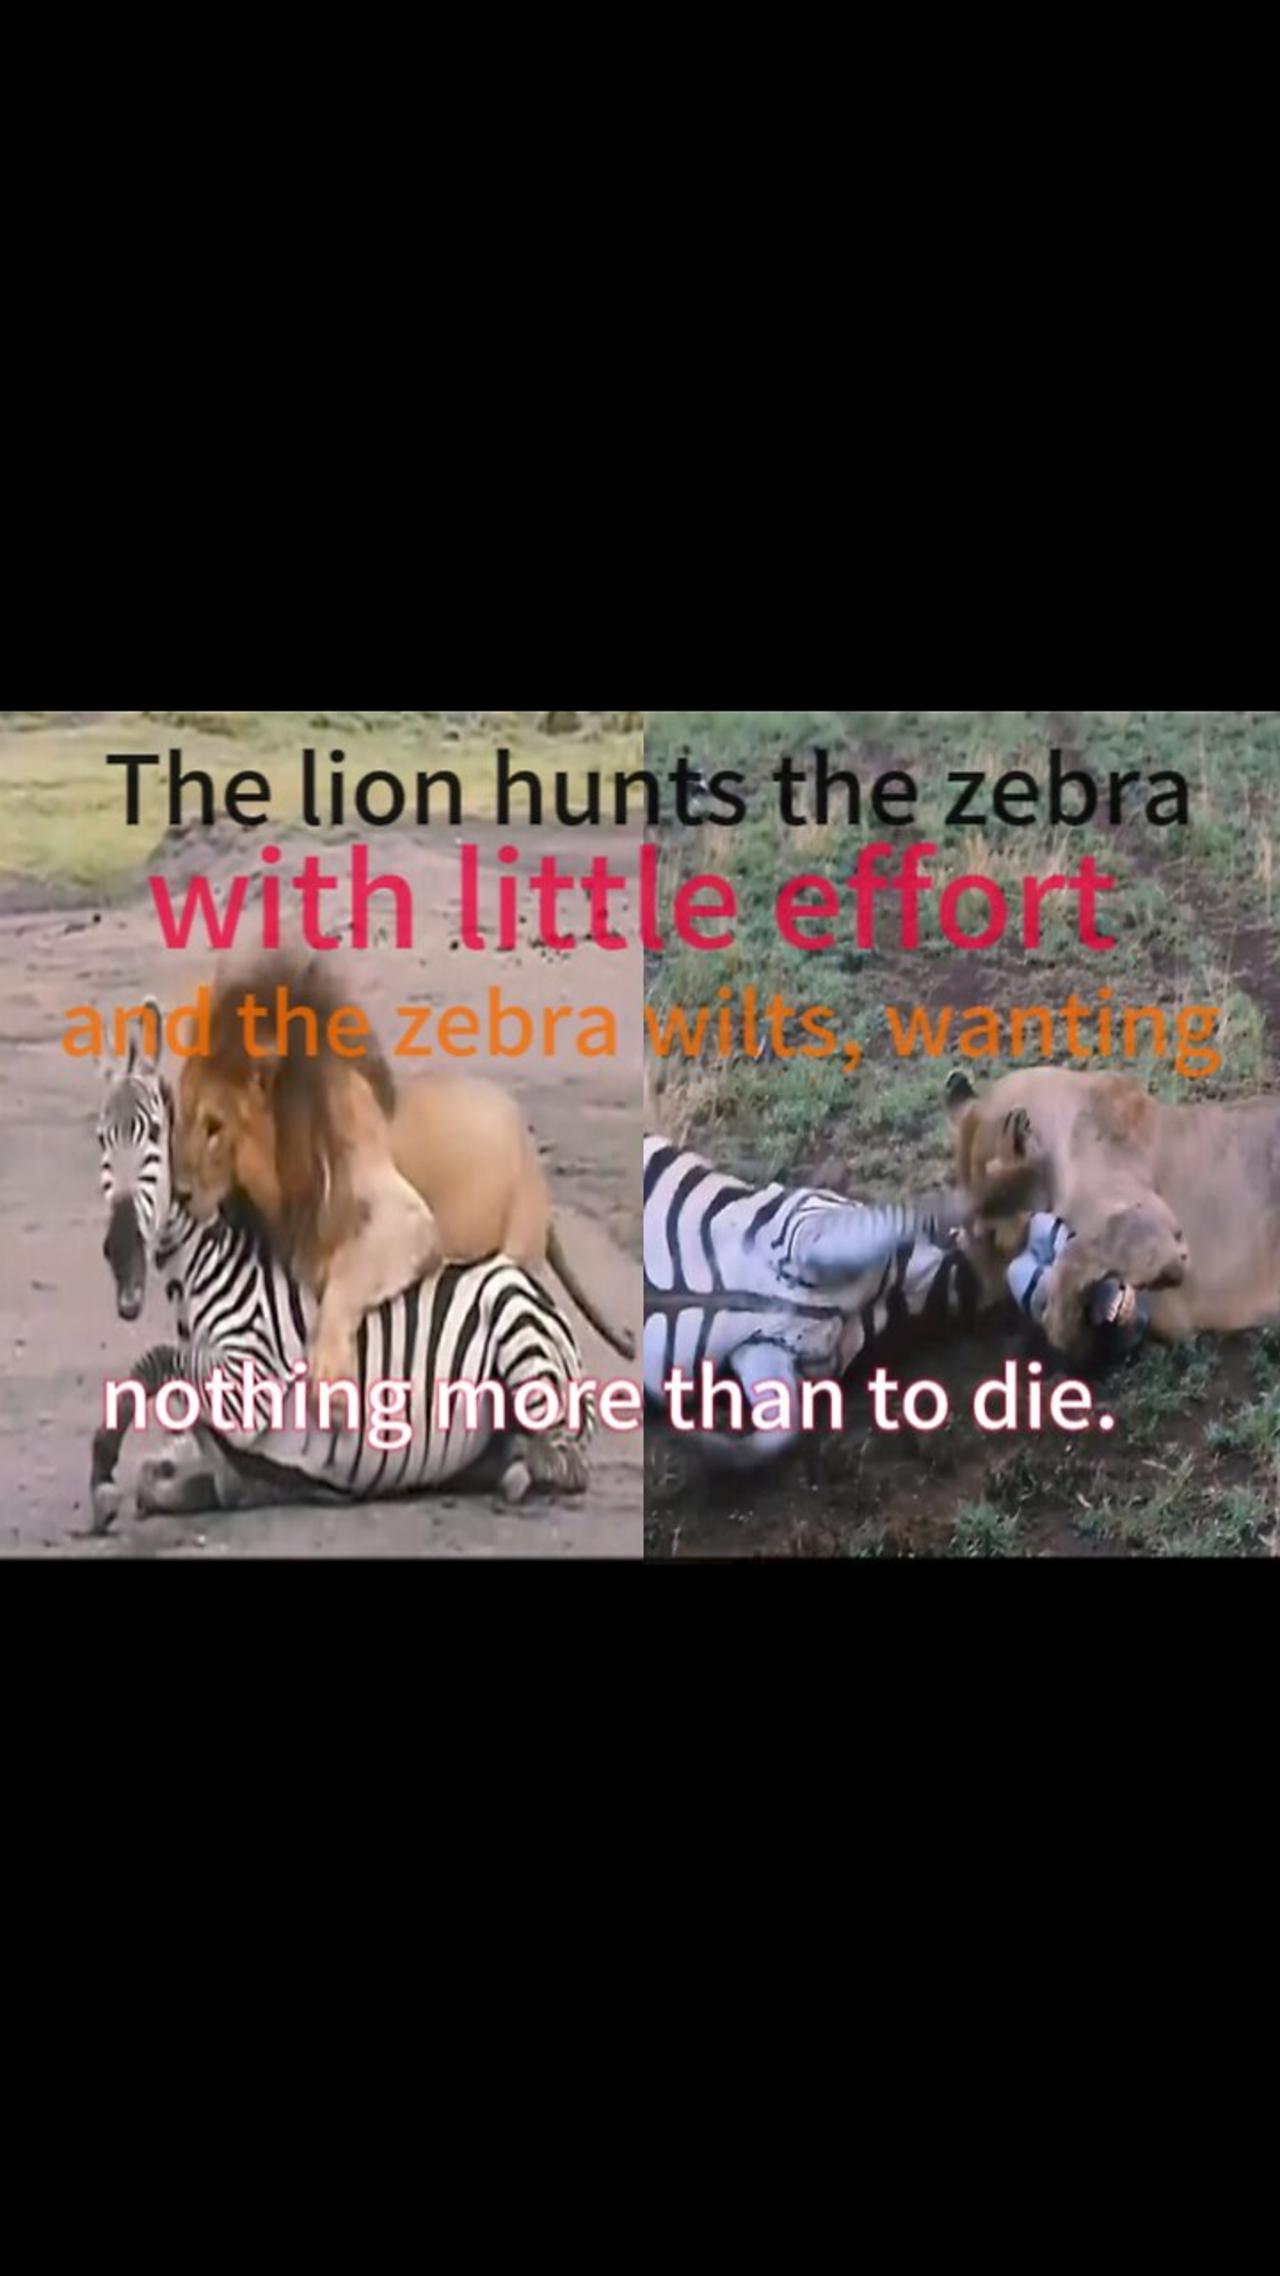 The lion hunts the zebra 🦓